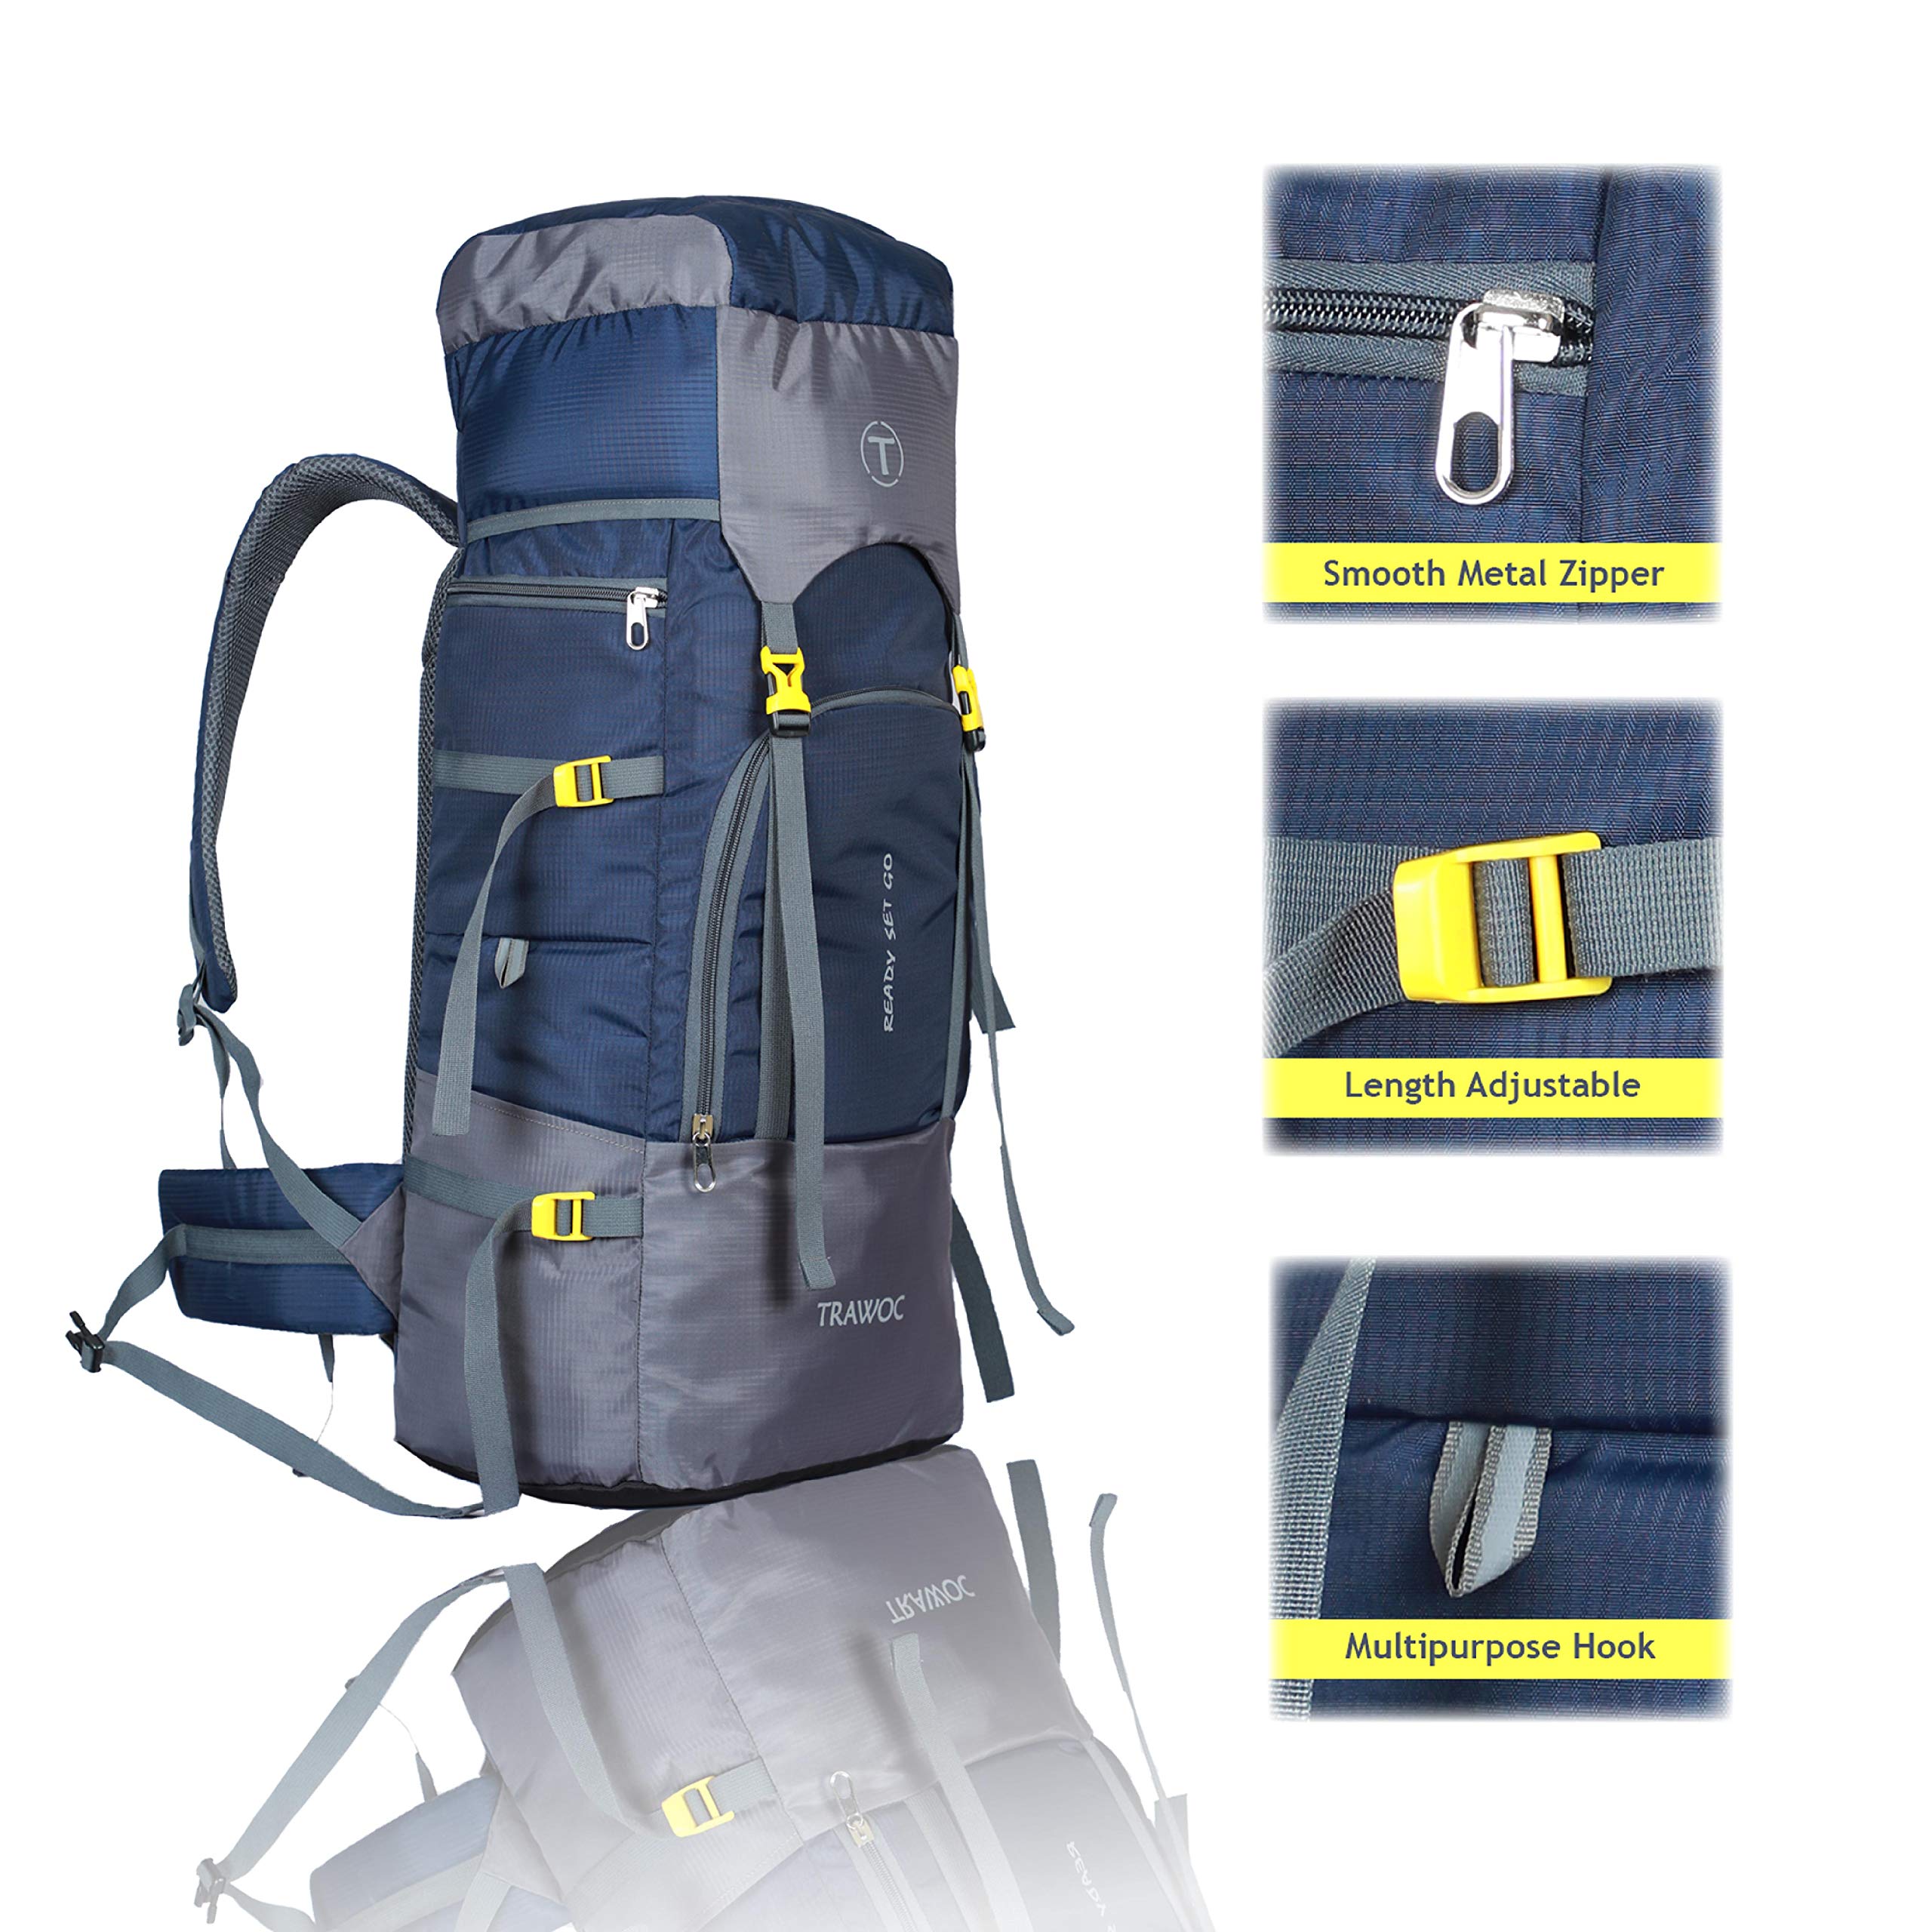 ALPINE-55 Backpack - Grey (Renewed)